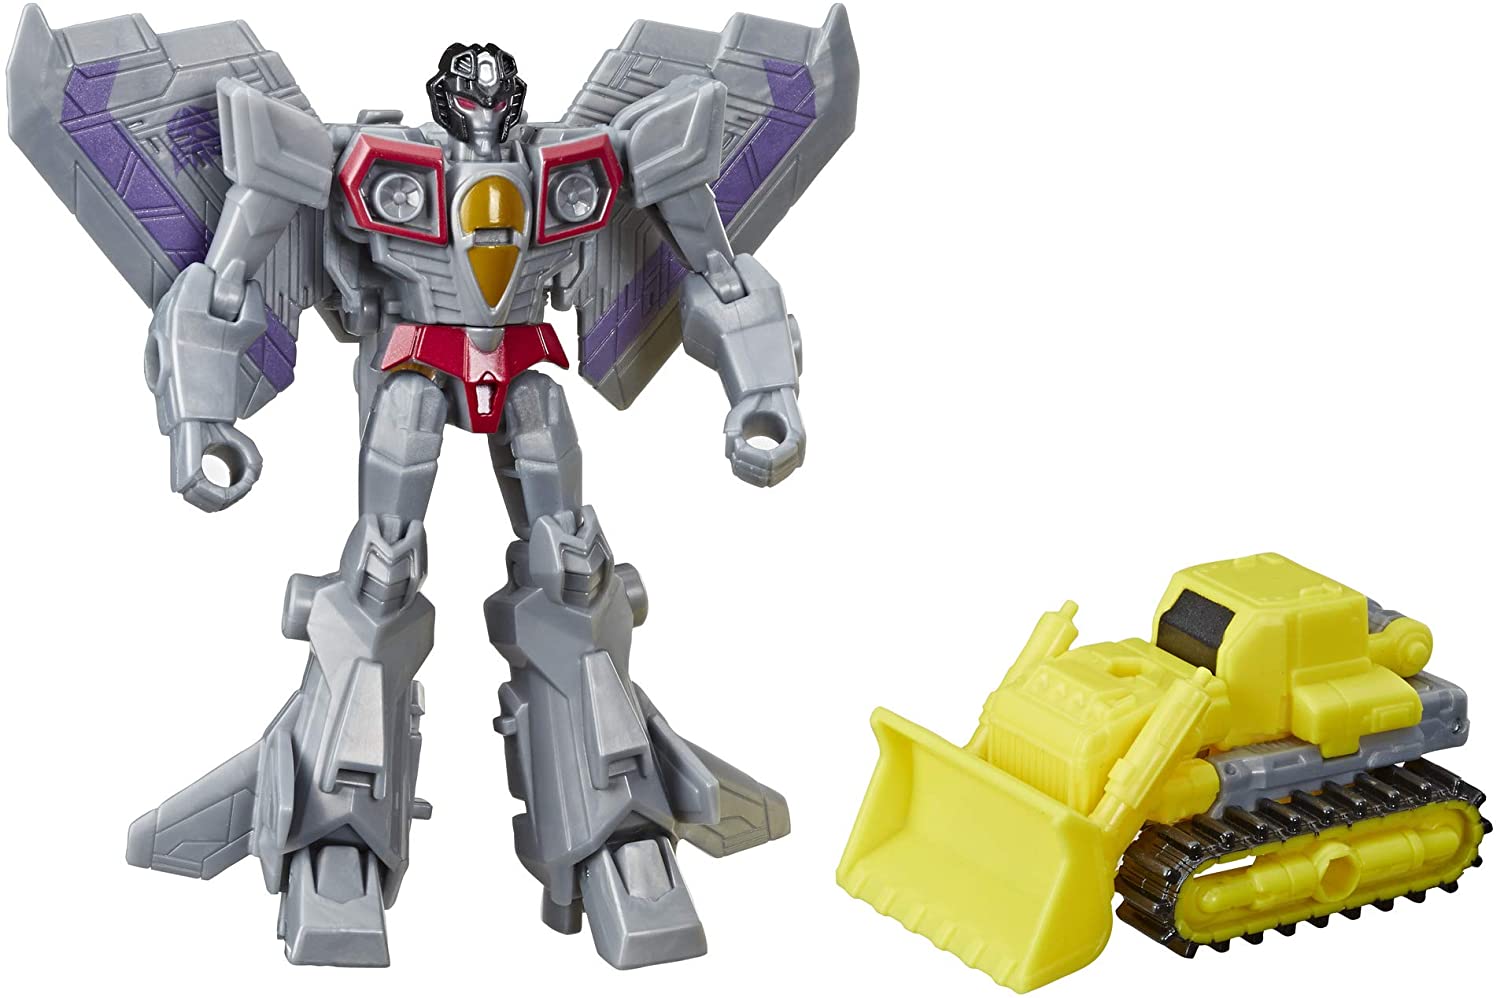 Transformers Toys Cyberverse Spark Armor Starscream Action Figure - Combine